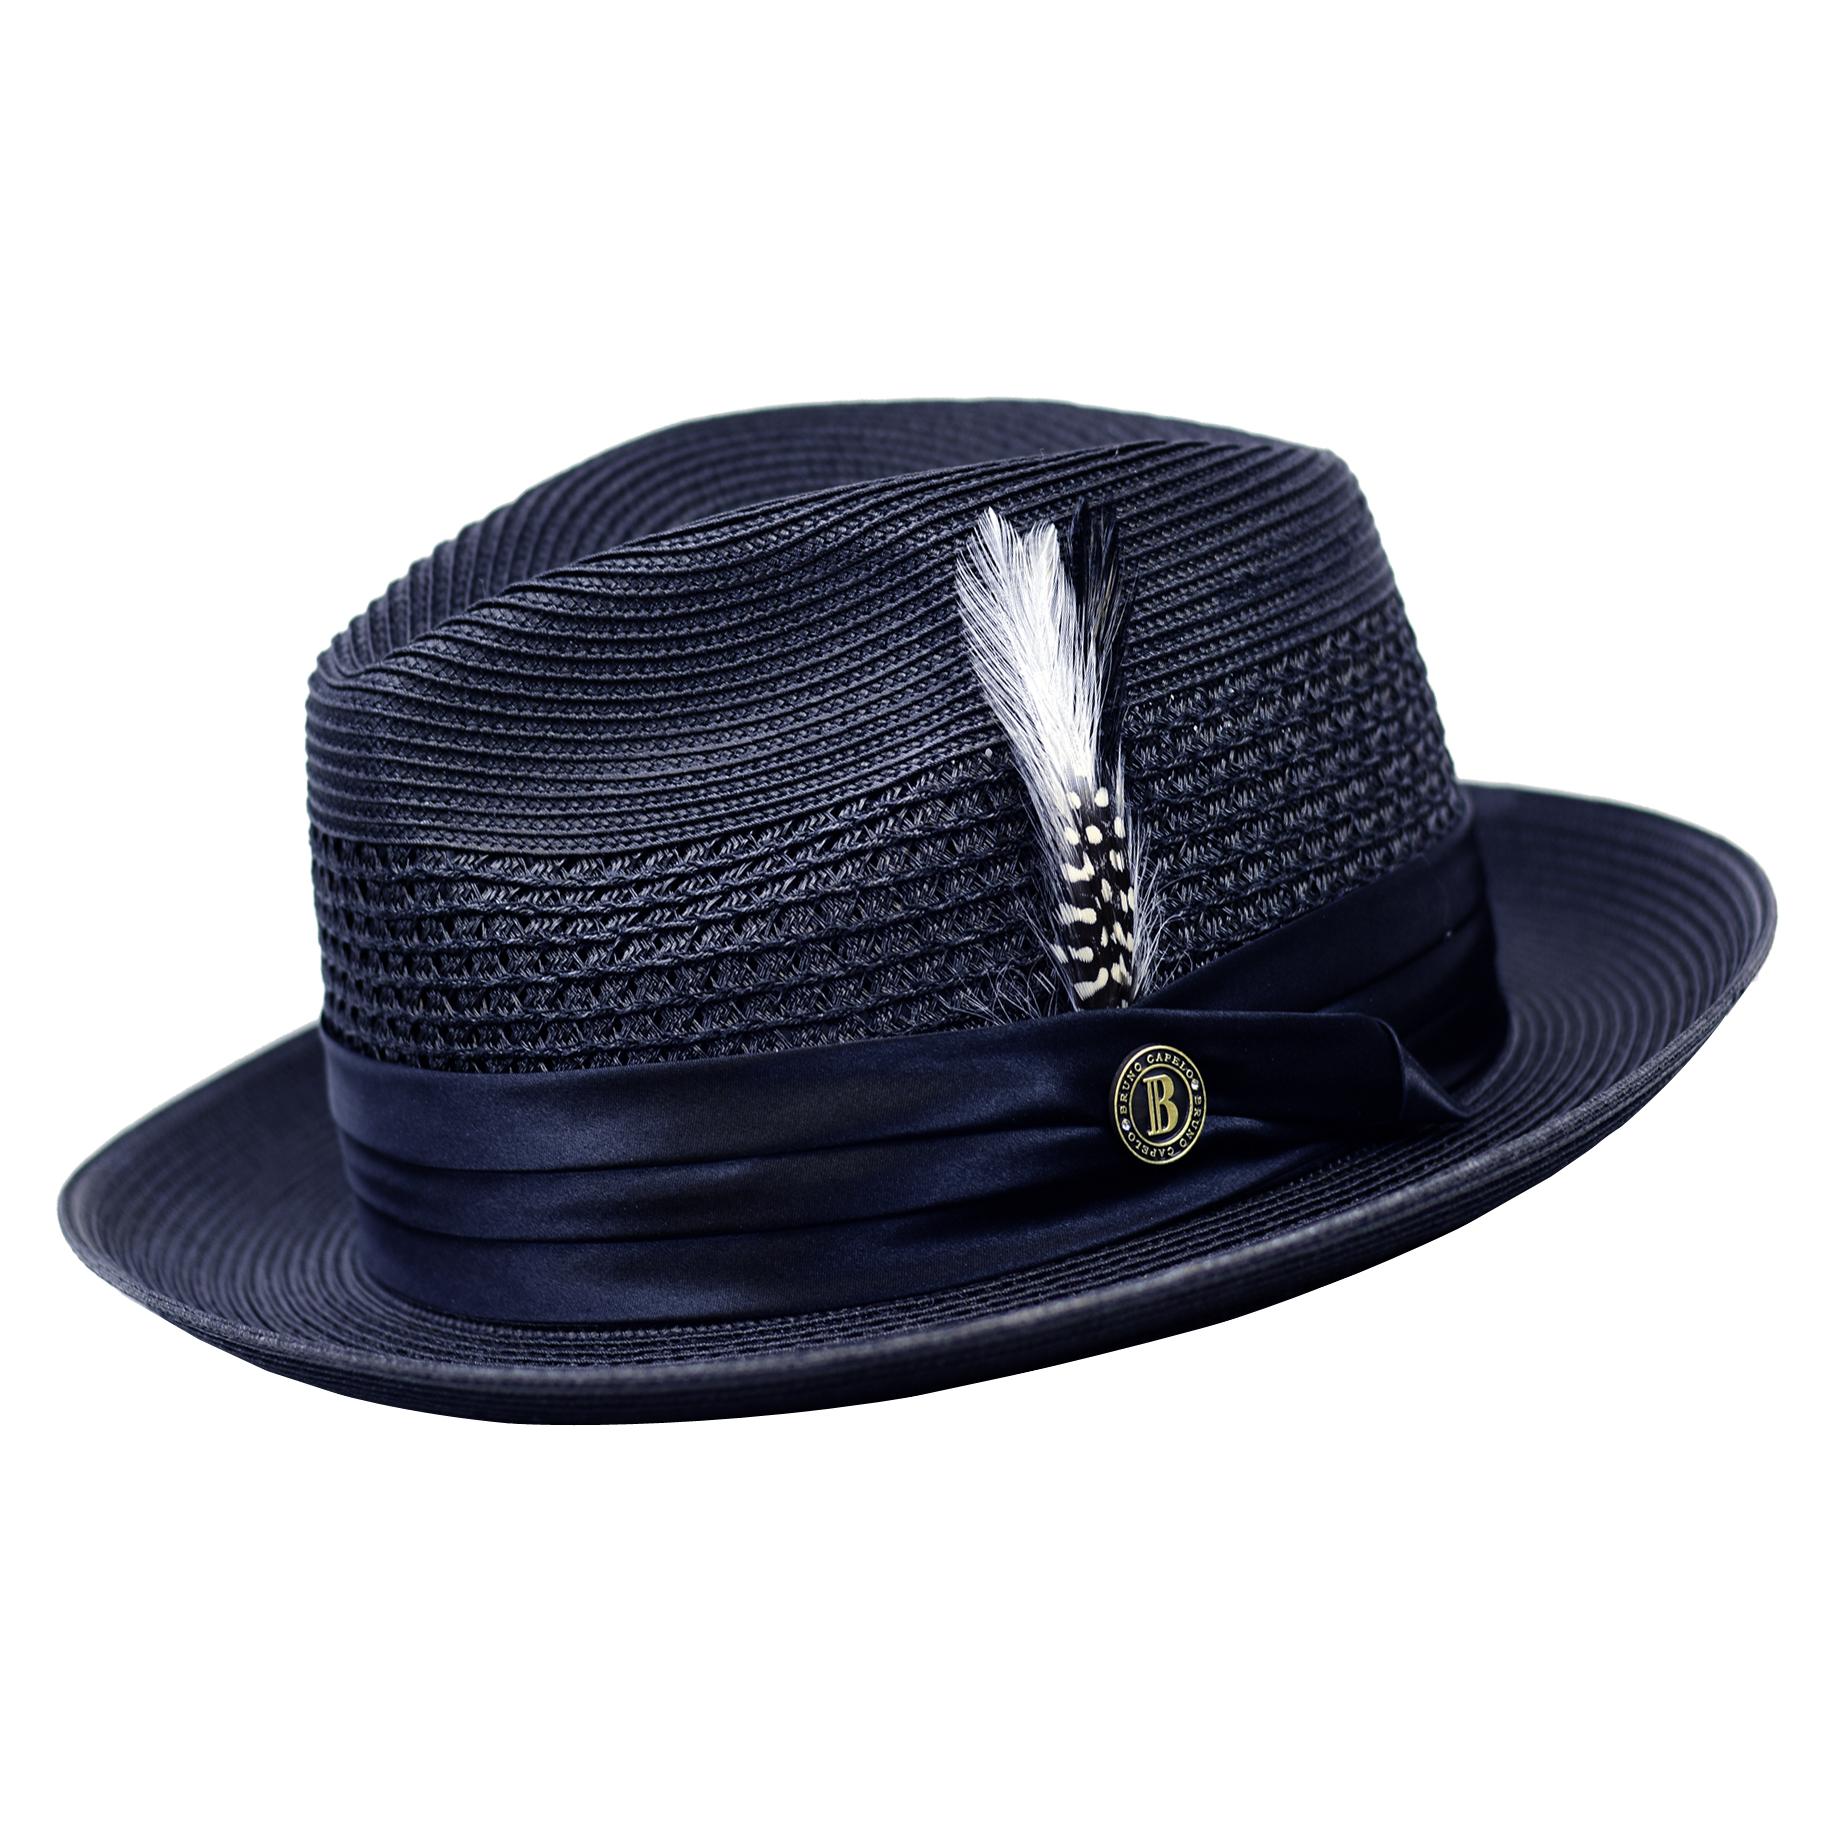 Bruno Capelo Navy Blue Fedora Braided Straw Hat DO-833 - $49.90 ...